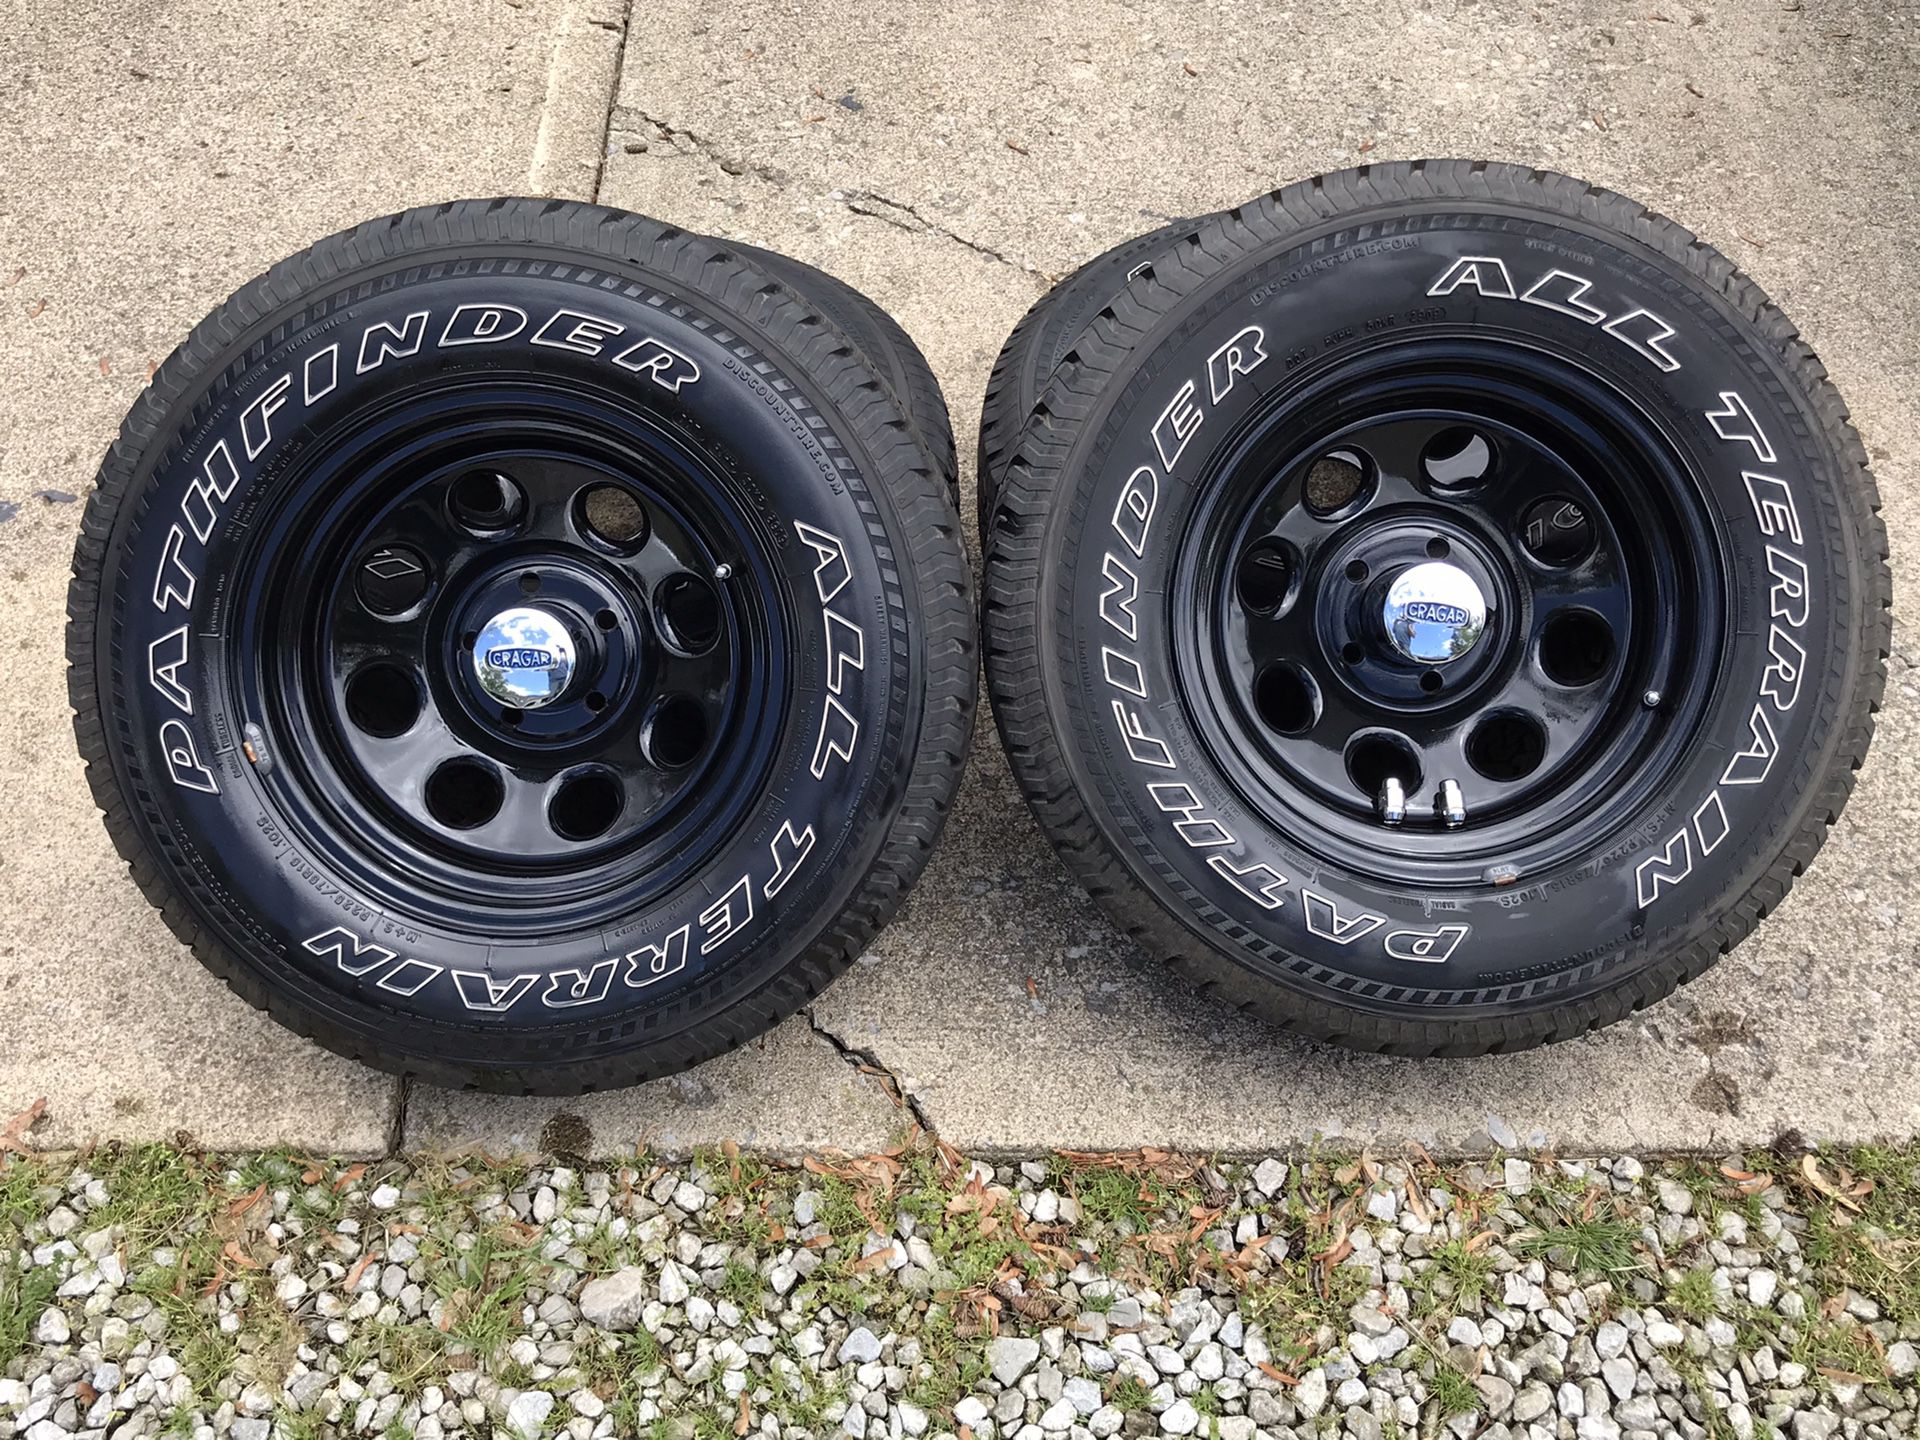 Pathfinder A/T tires & Cragar rims